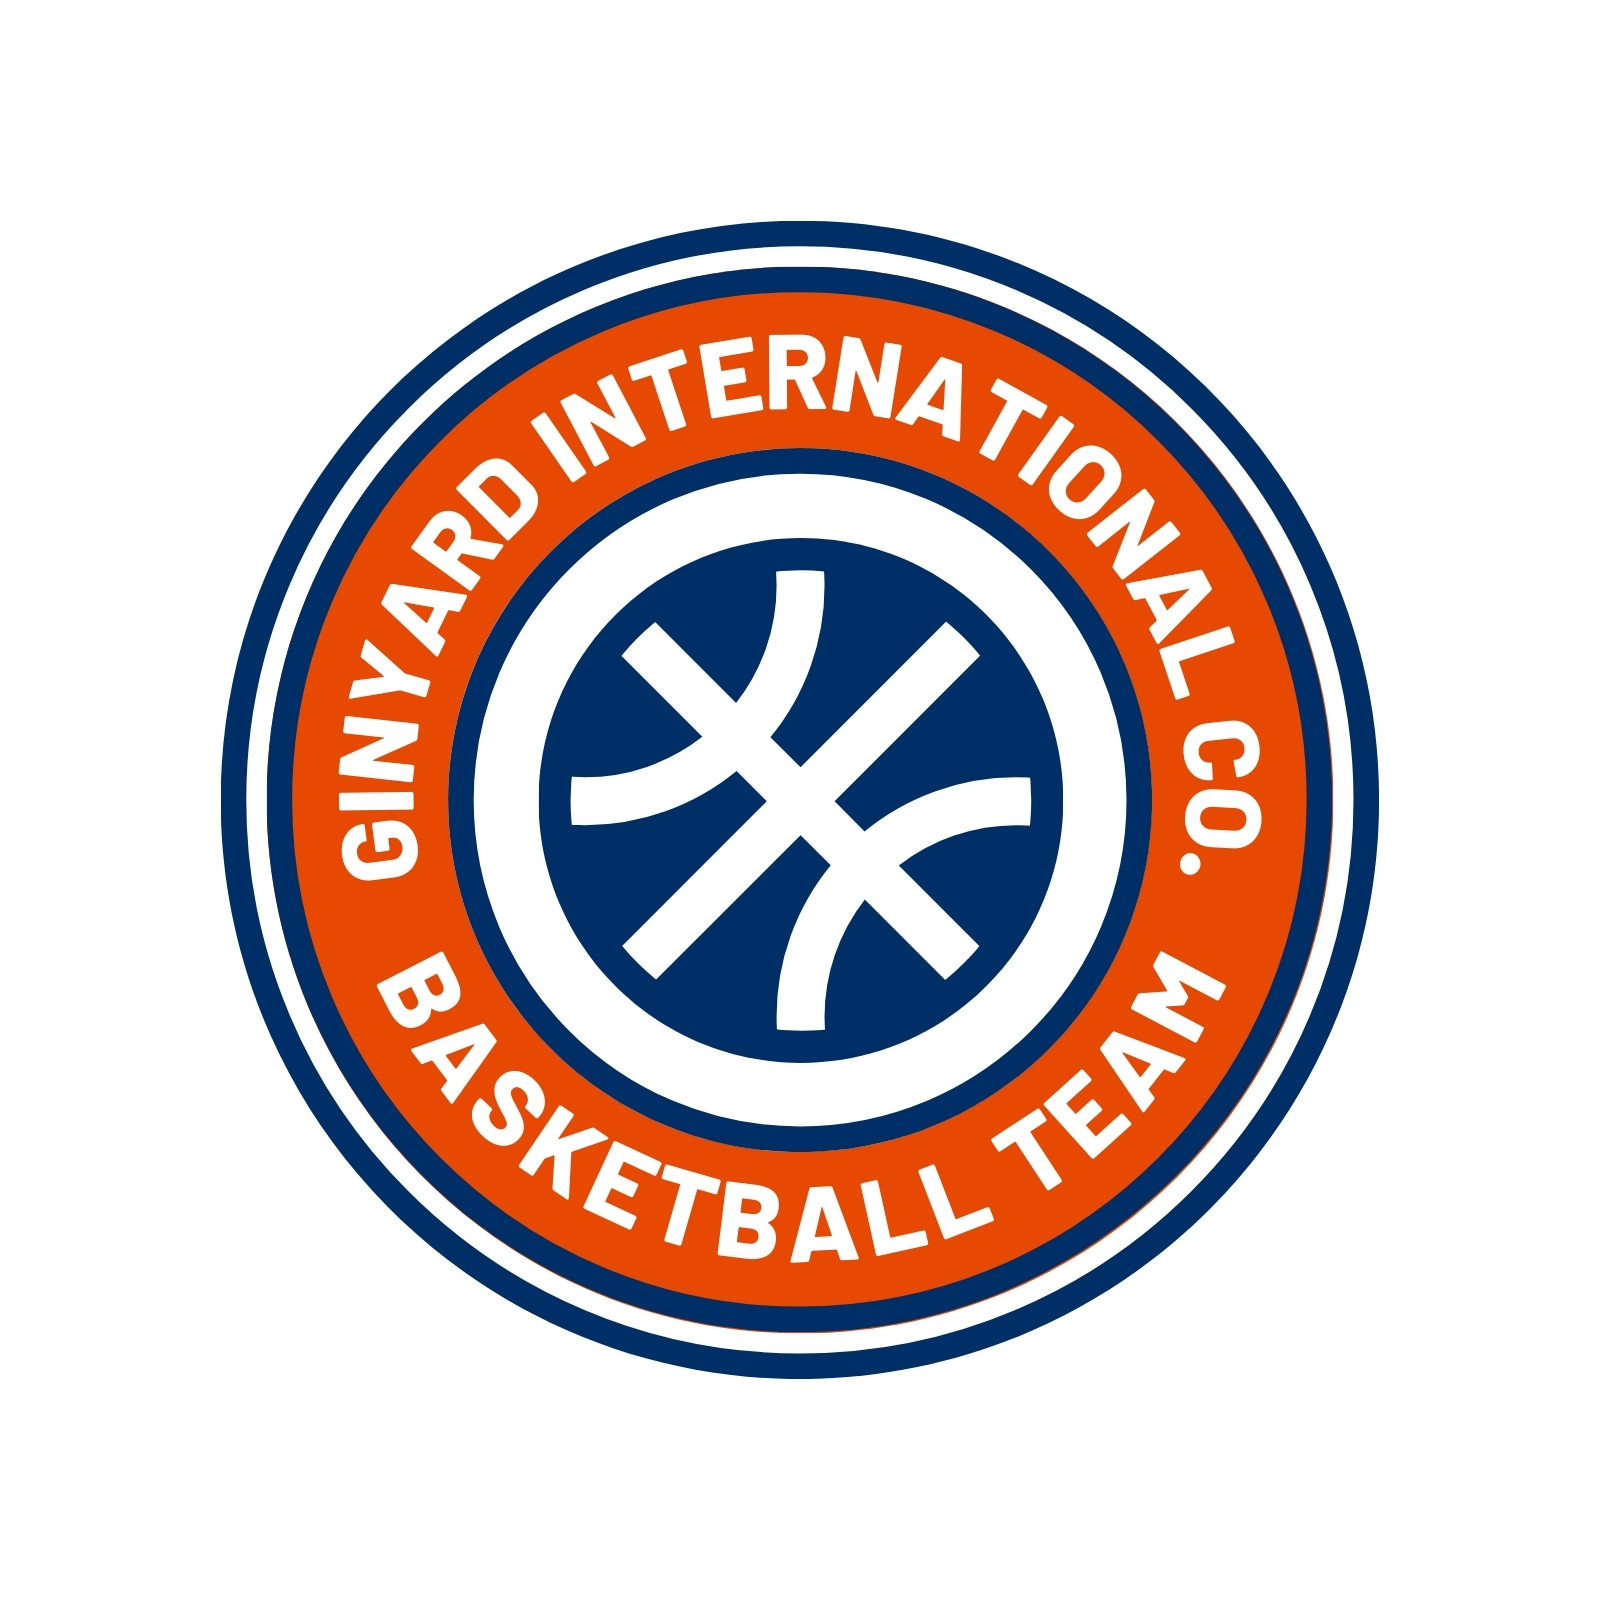 Free printable, customizable basketball logo templates